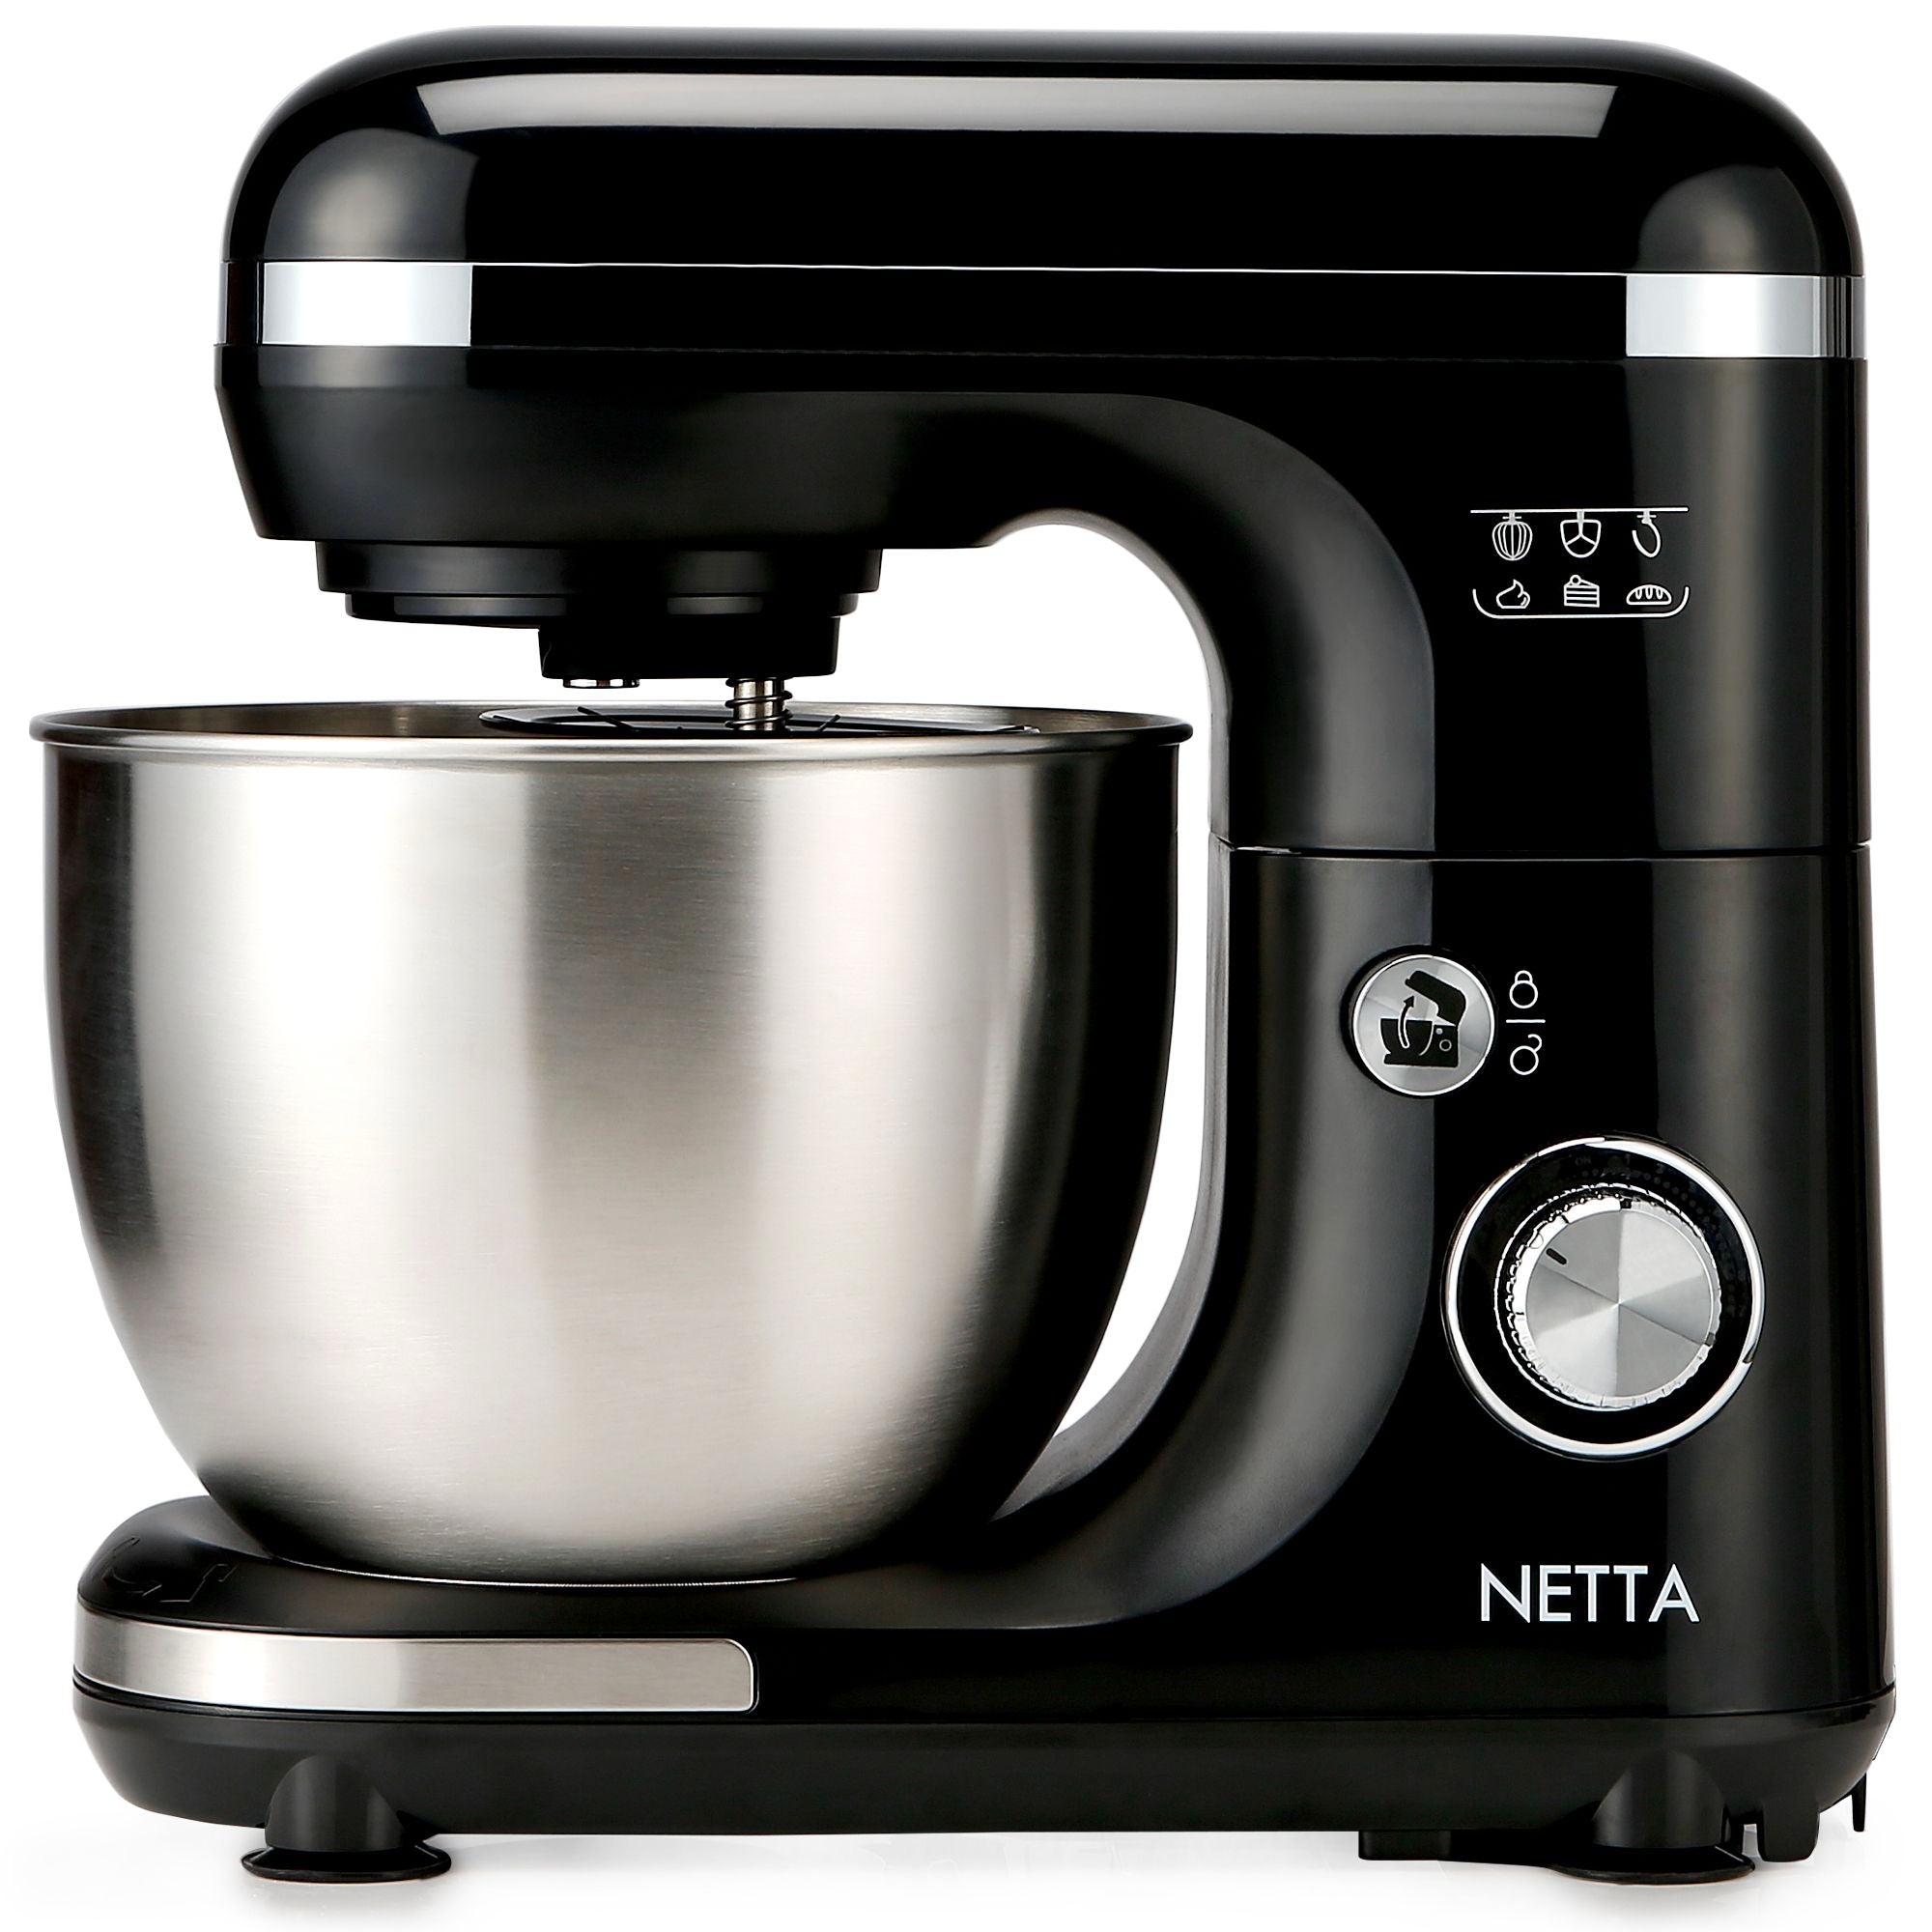 NETTA 600W Stand Mixer - Black